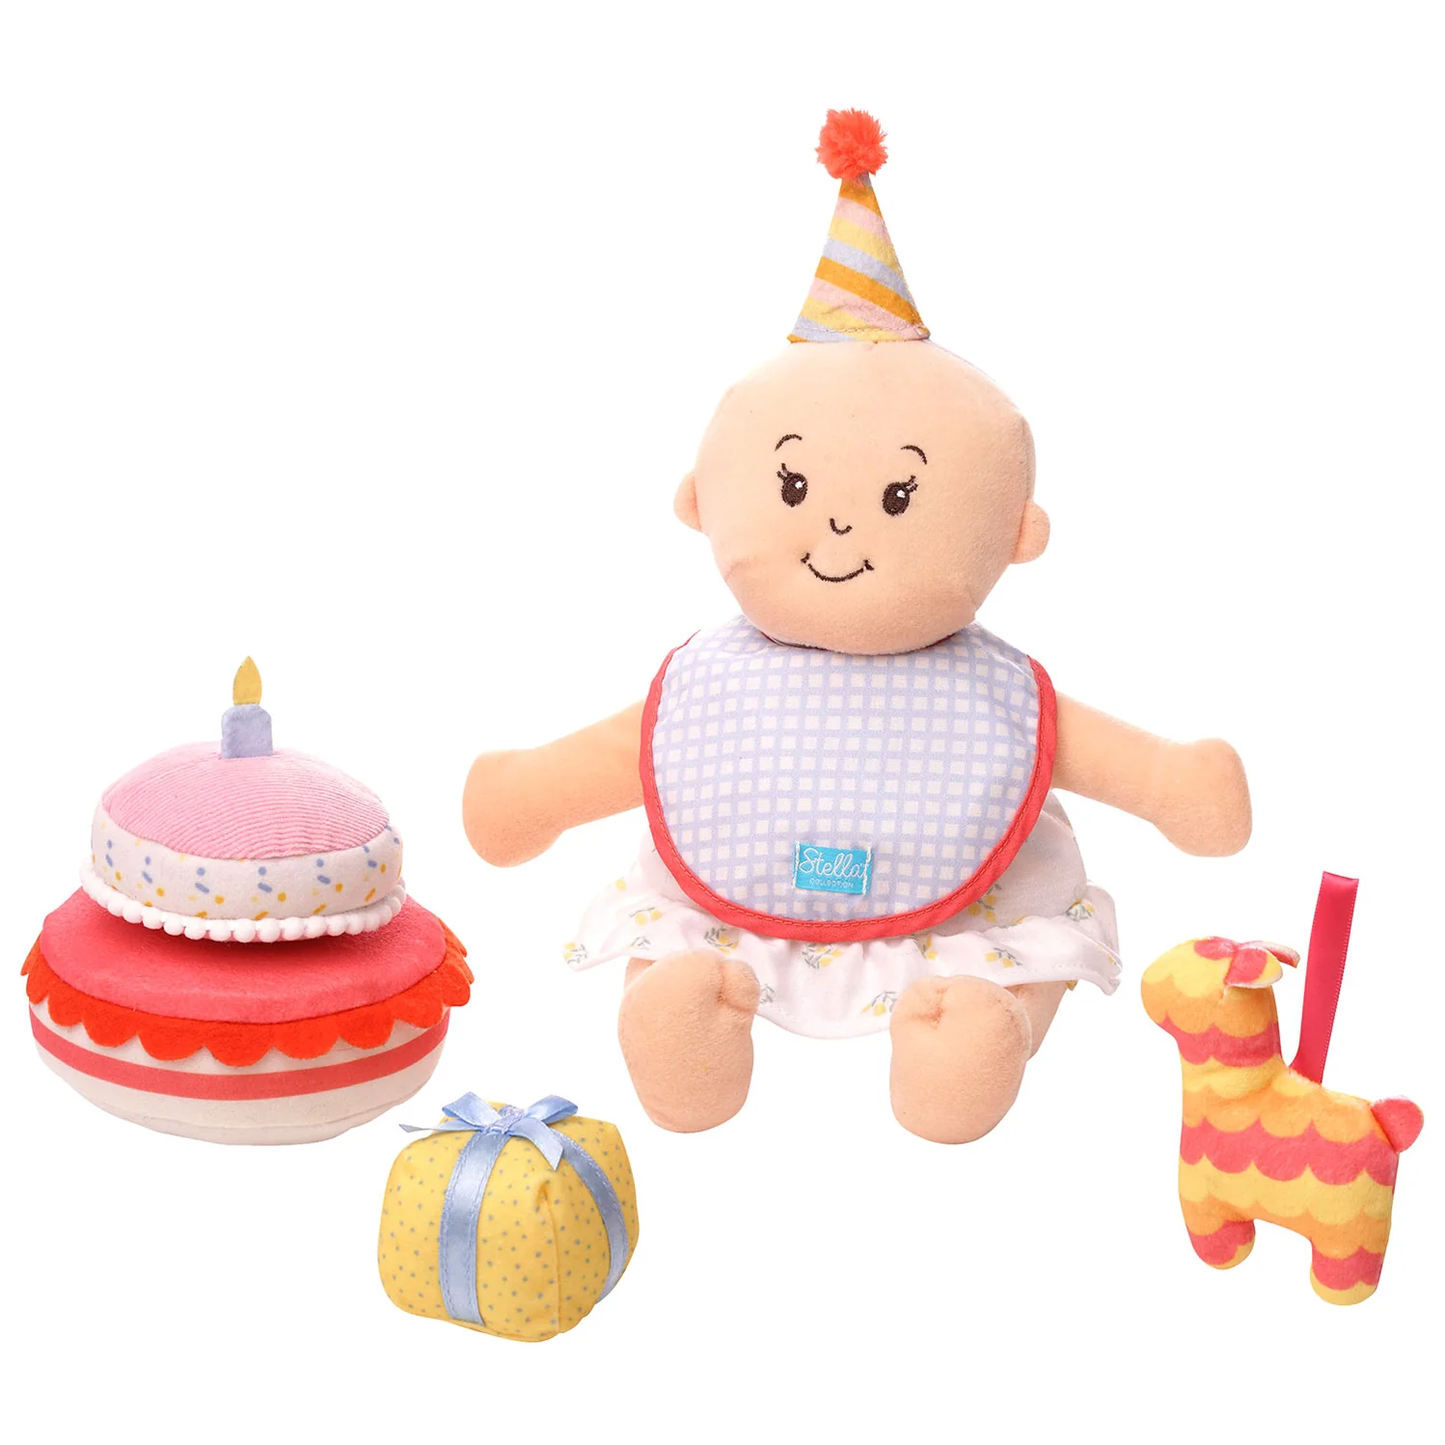 Baby Stella Birthday Party Accessories